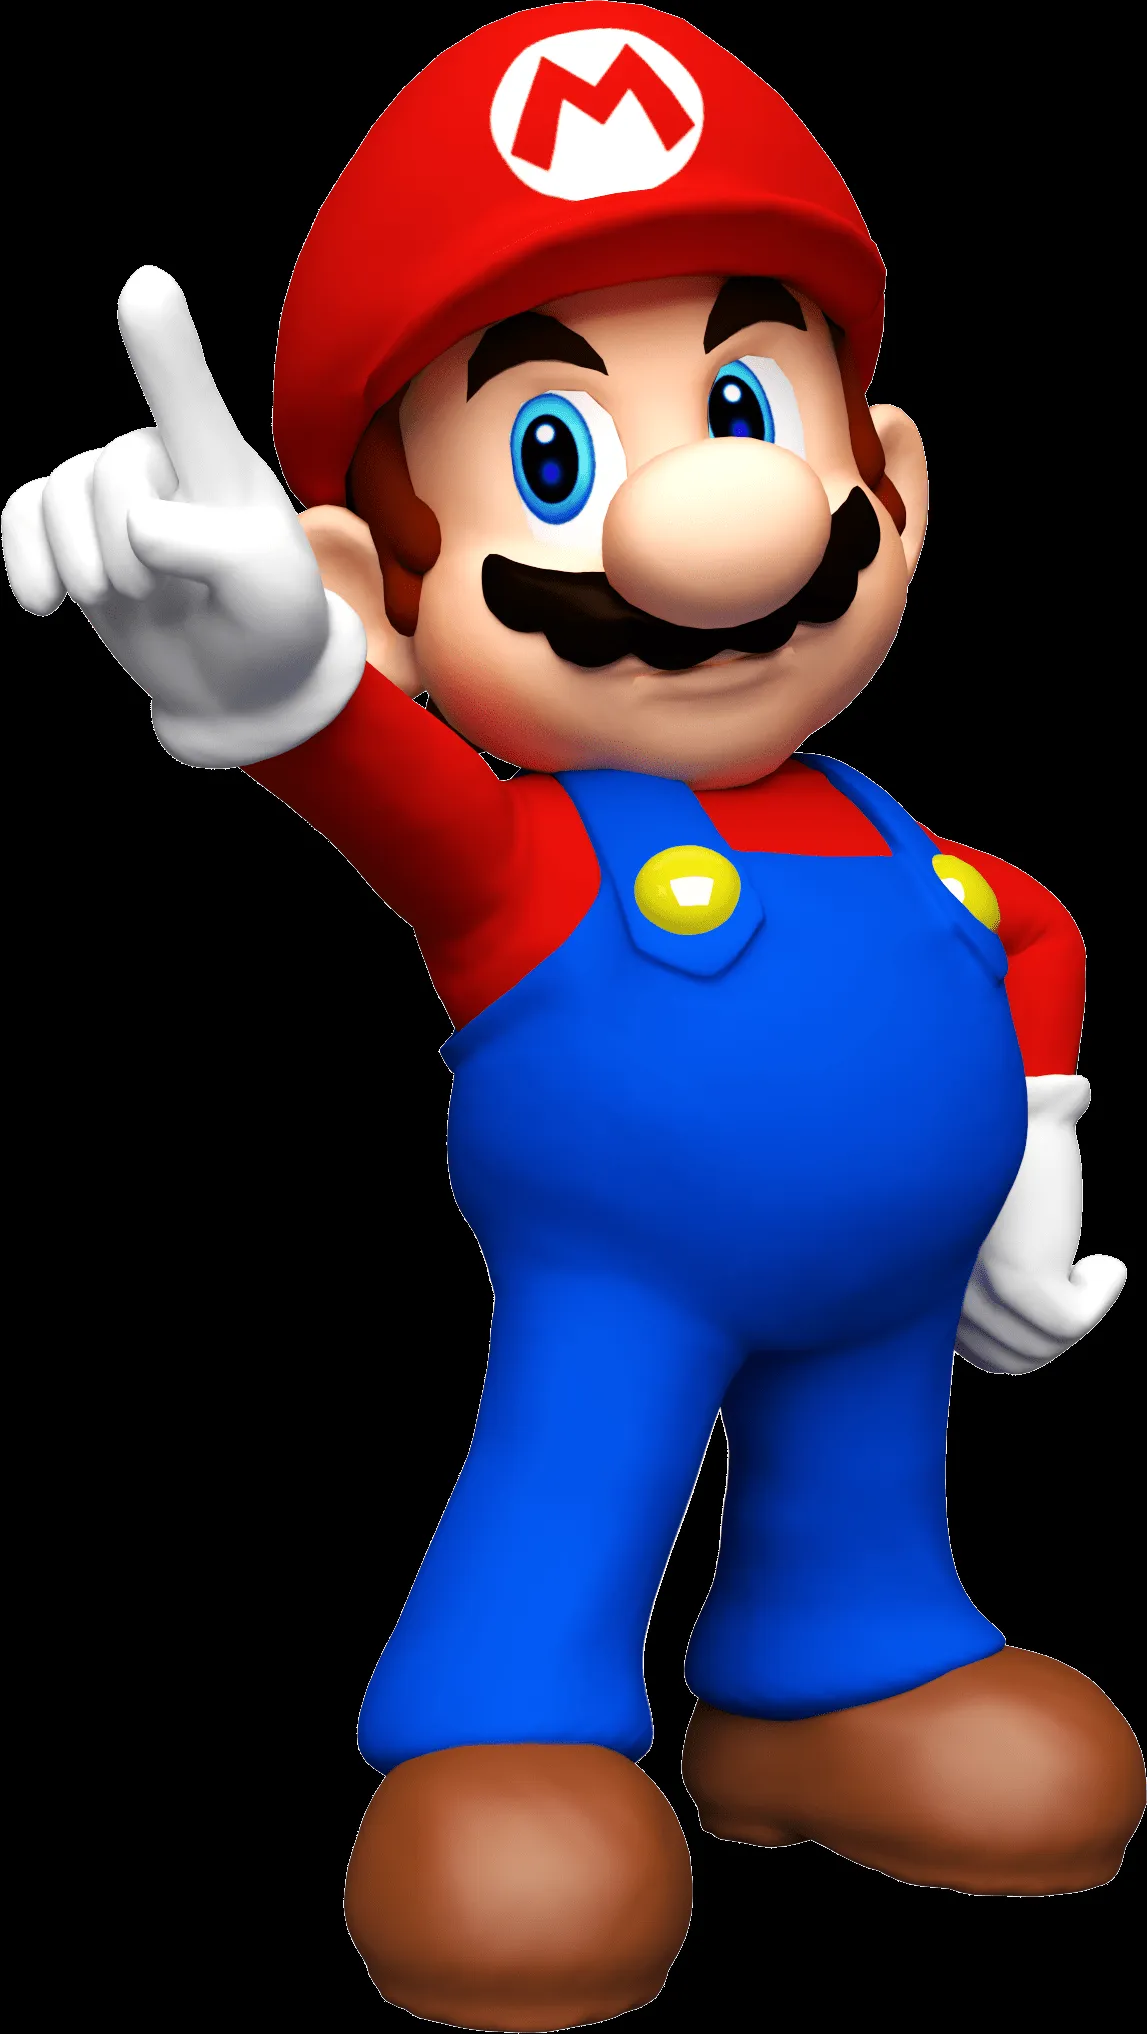 Super Mario and Friends: Zennu Quest - Fantendo, the Nintendo ...